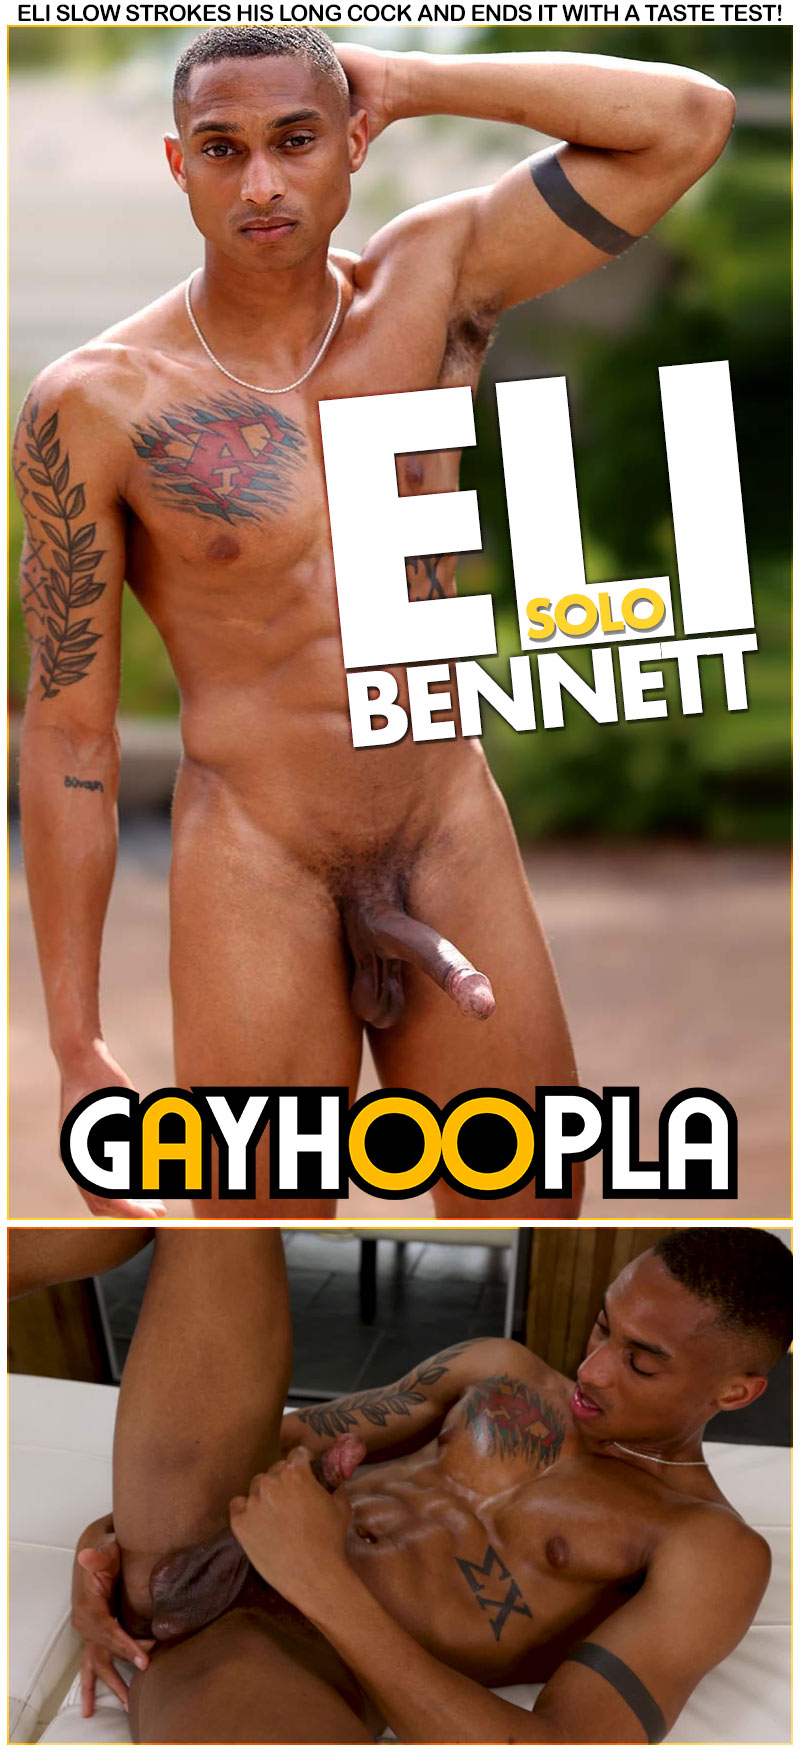 Eli Bennett Slow Strokes His Long Cock at GayHoopla